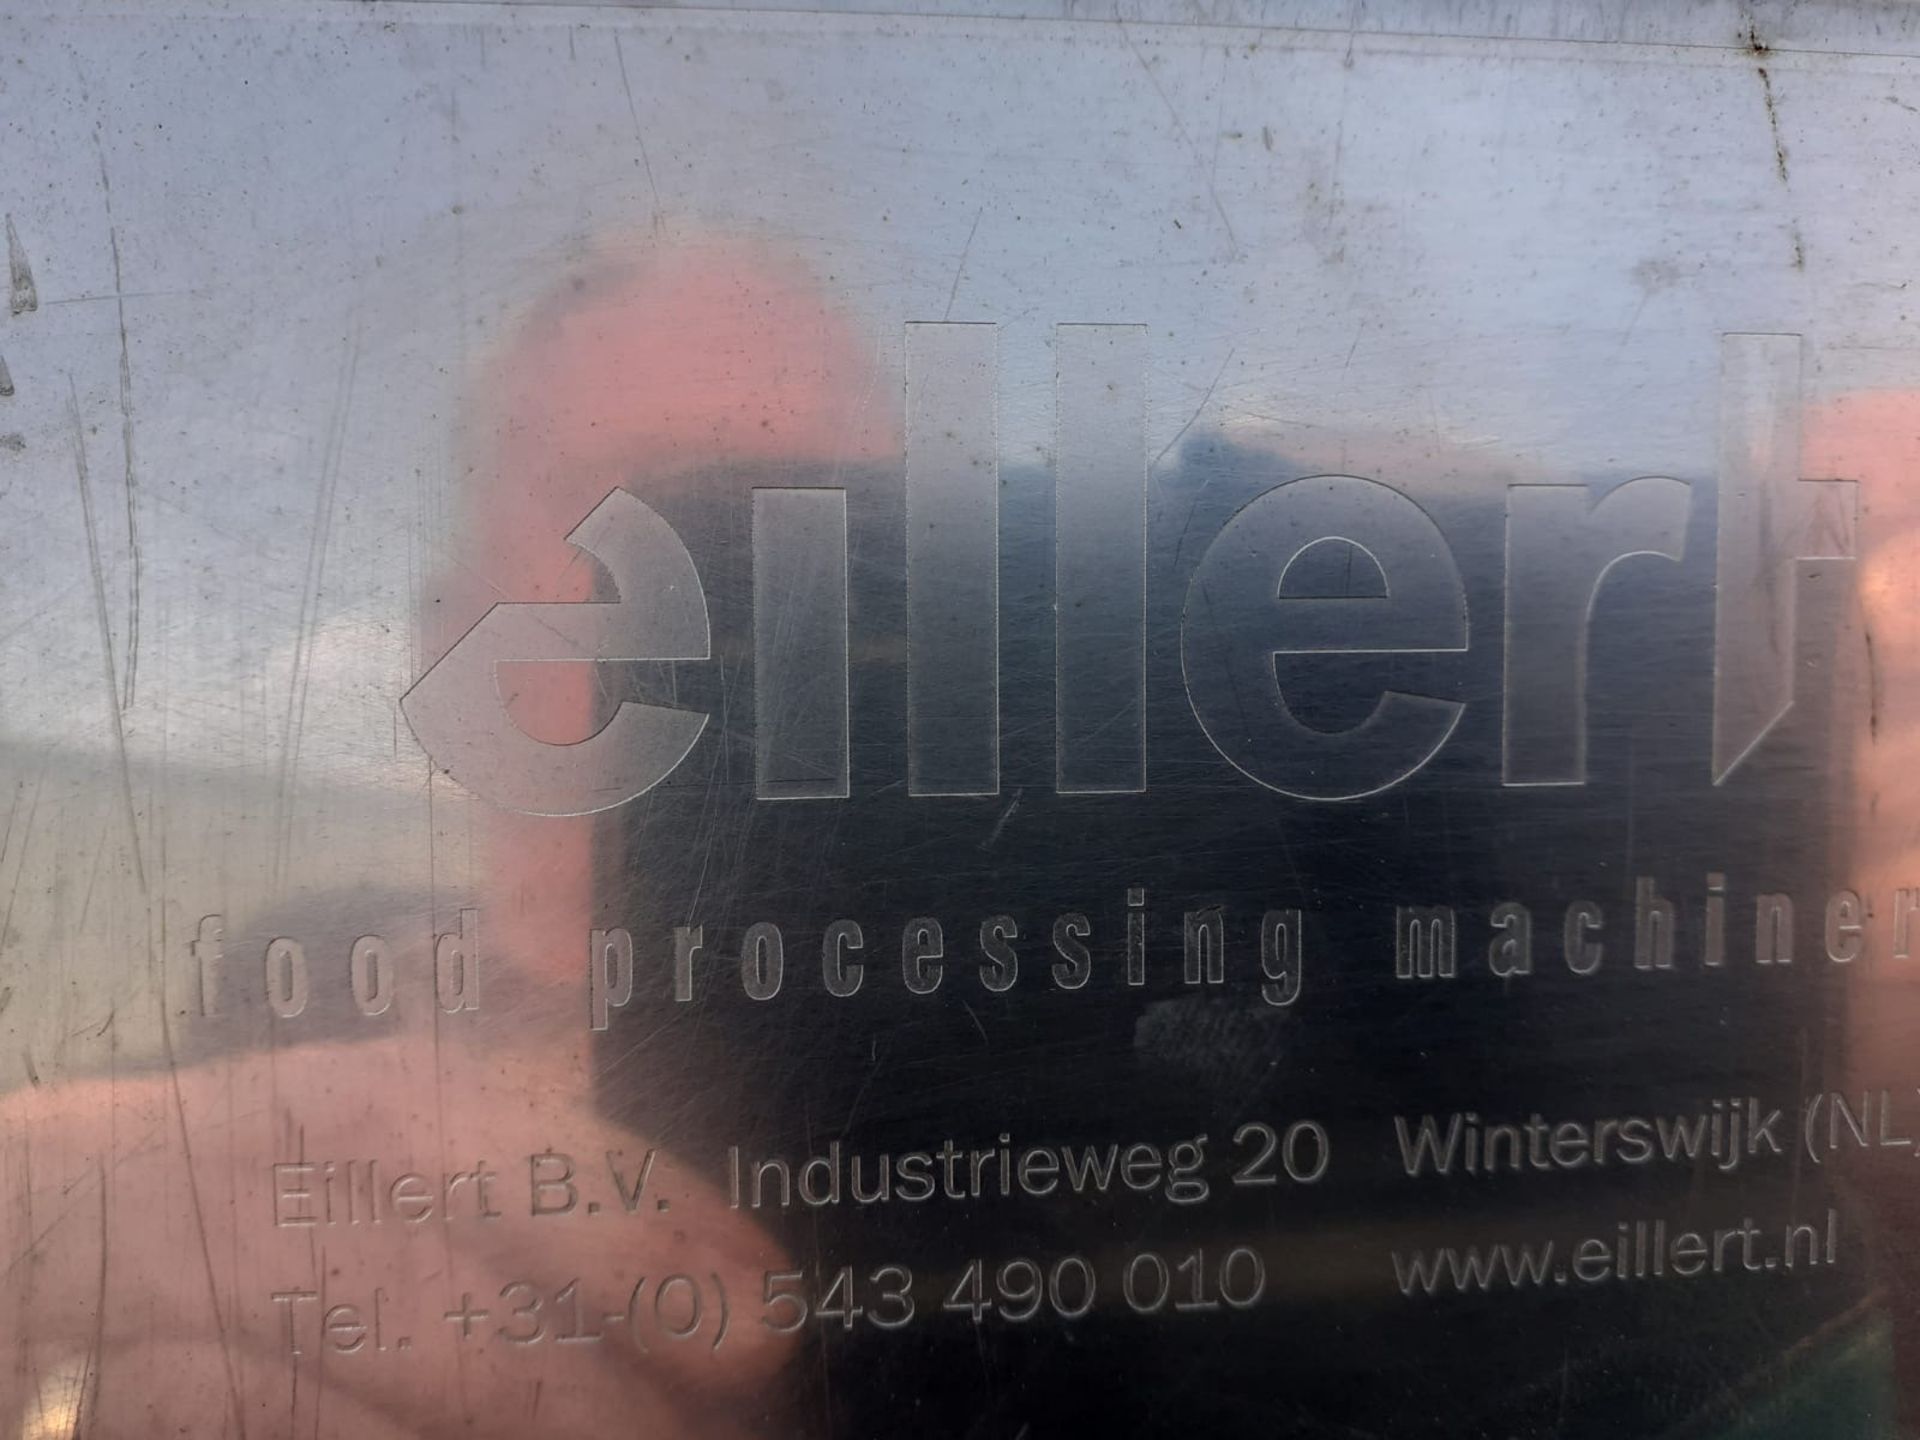 Eillert slicer - Image 4 of 4